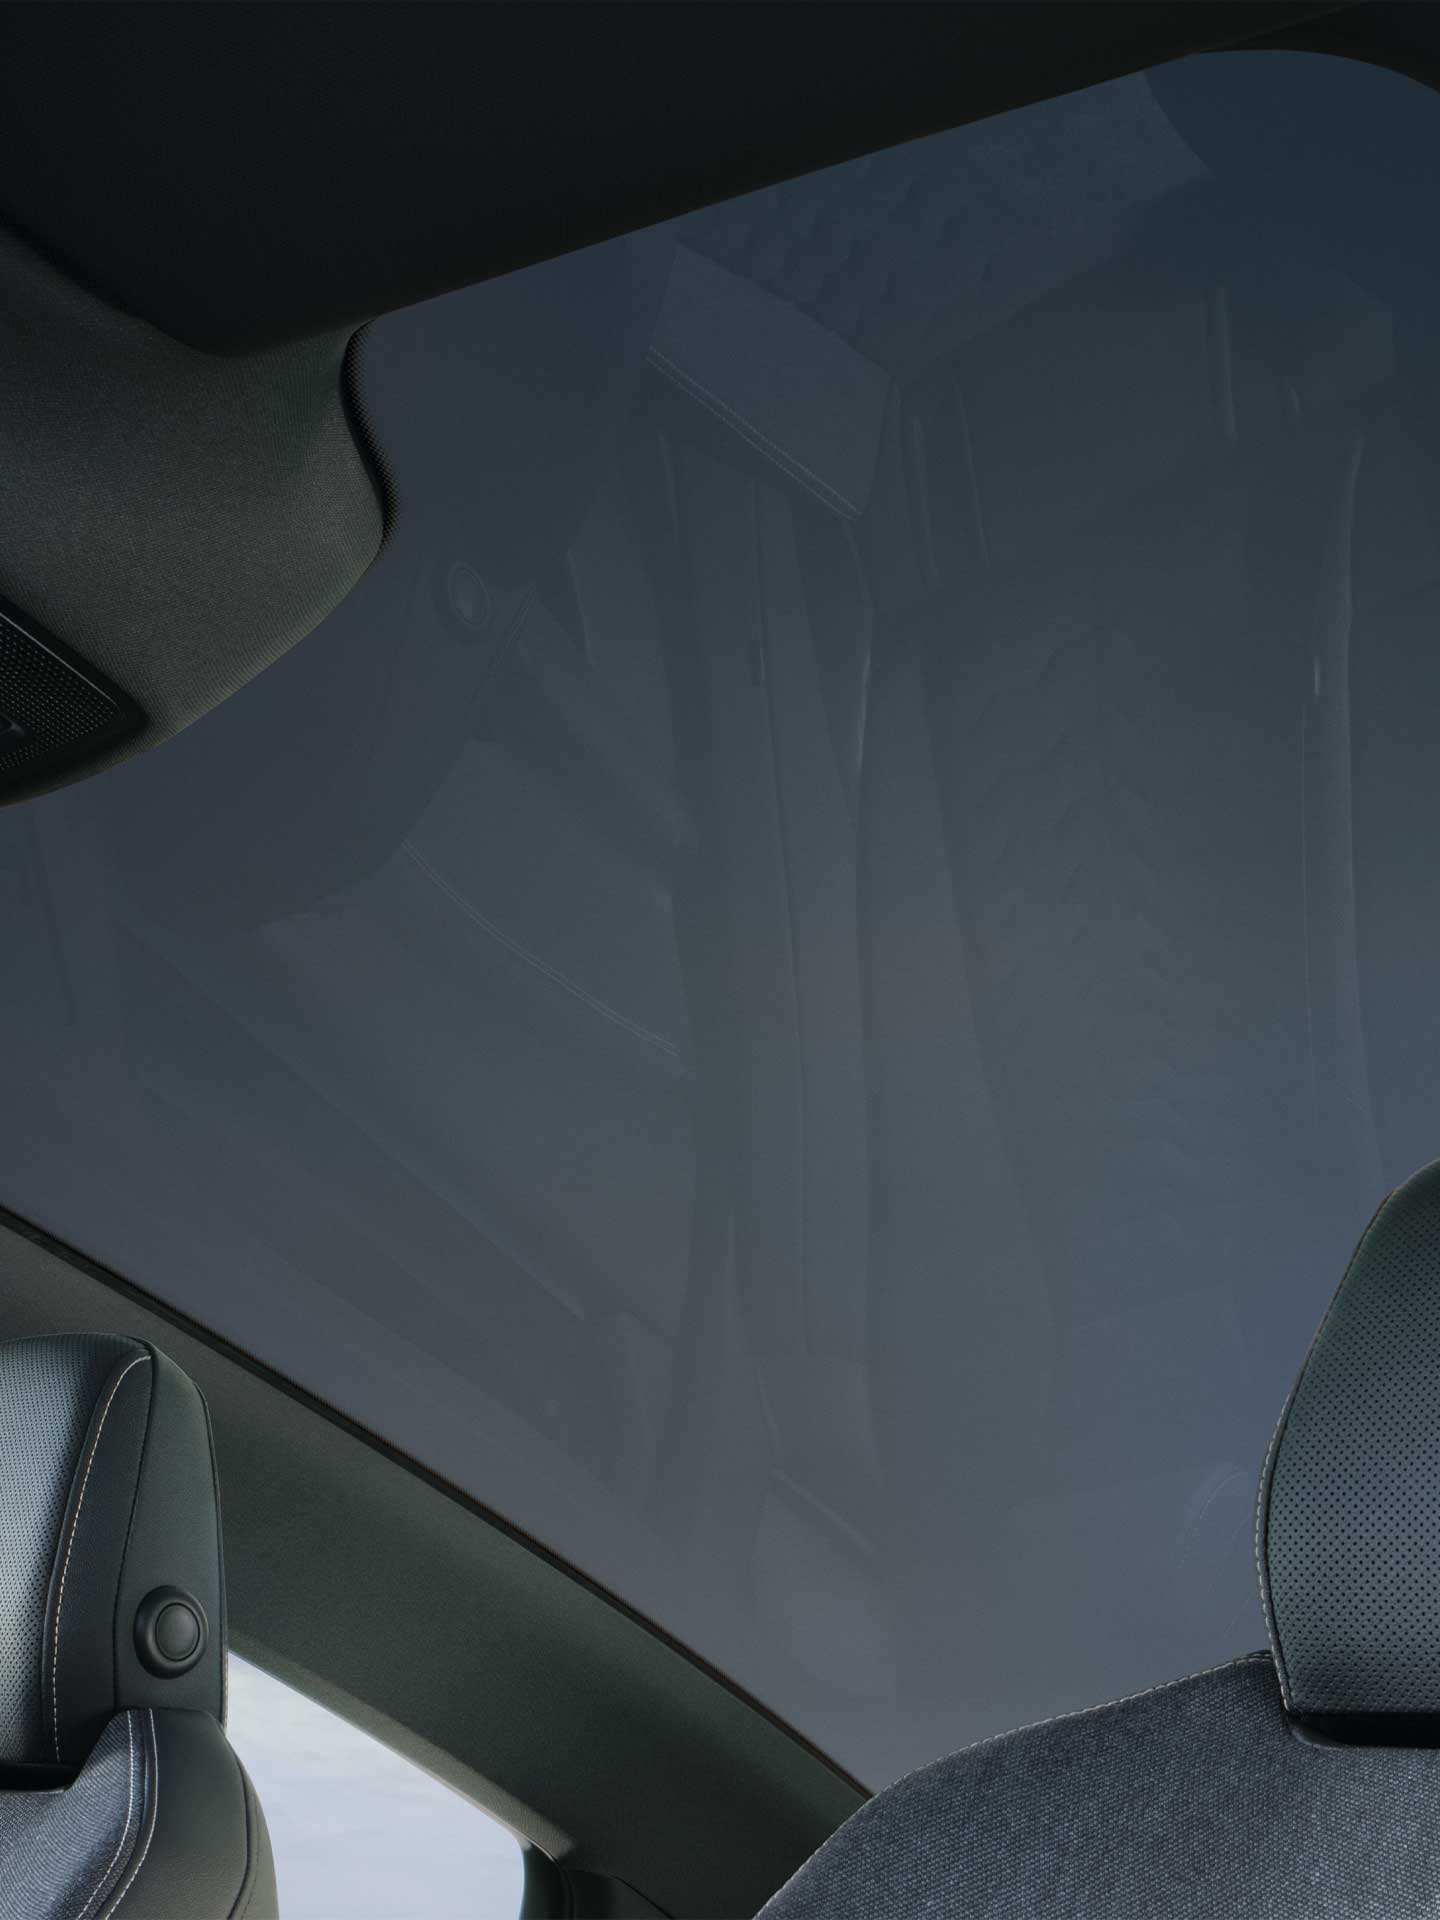 Audi A6 e-tron Sportback roof